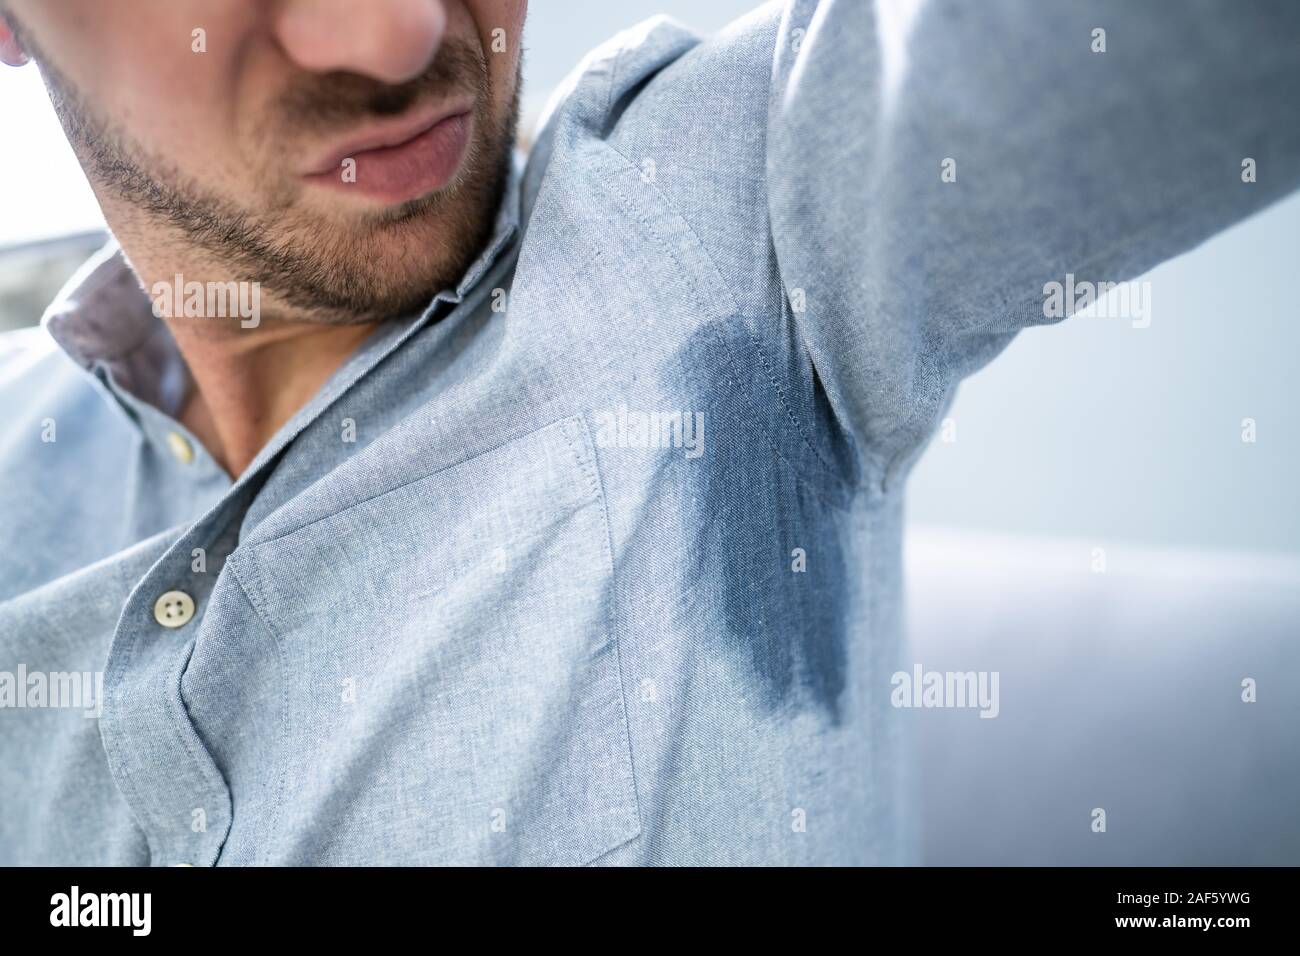 Mature Man Notices His Sweat Under Armpit Stock Photo